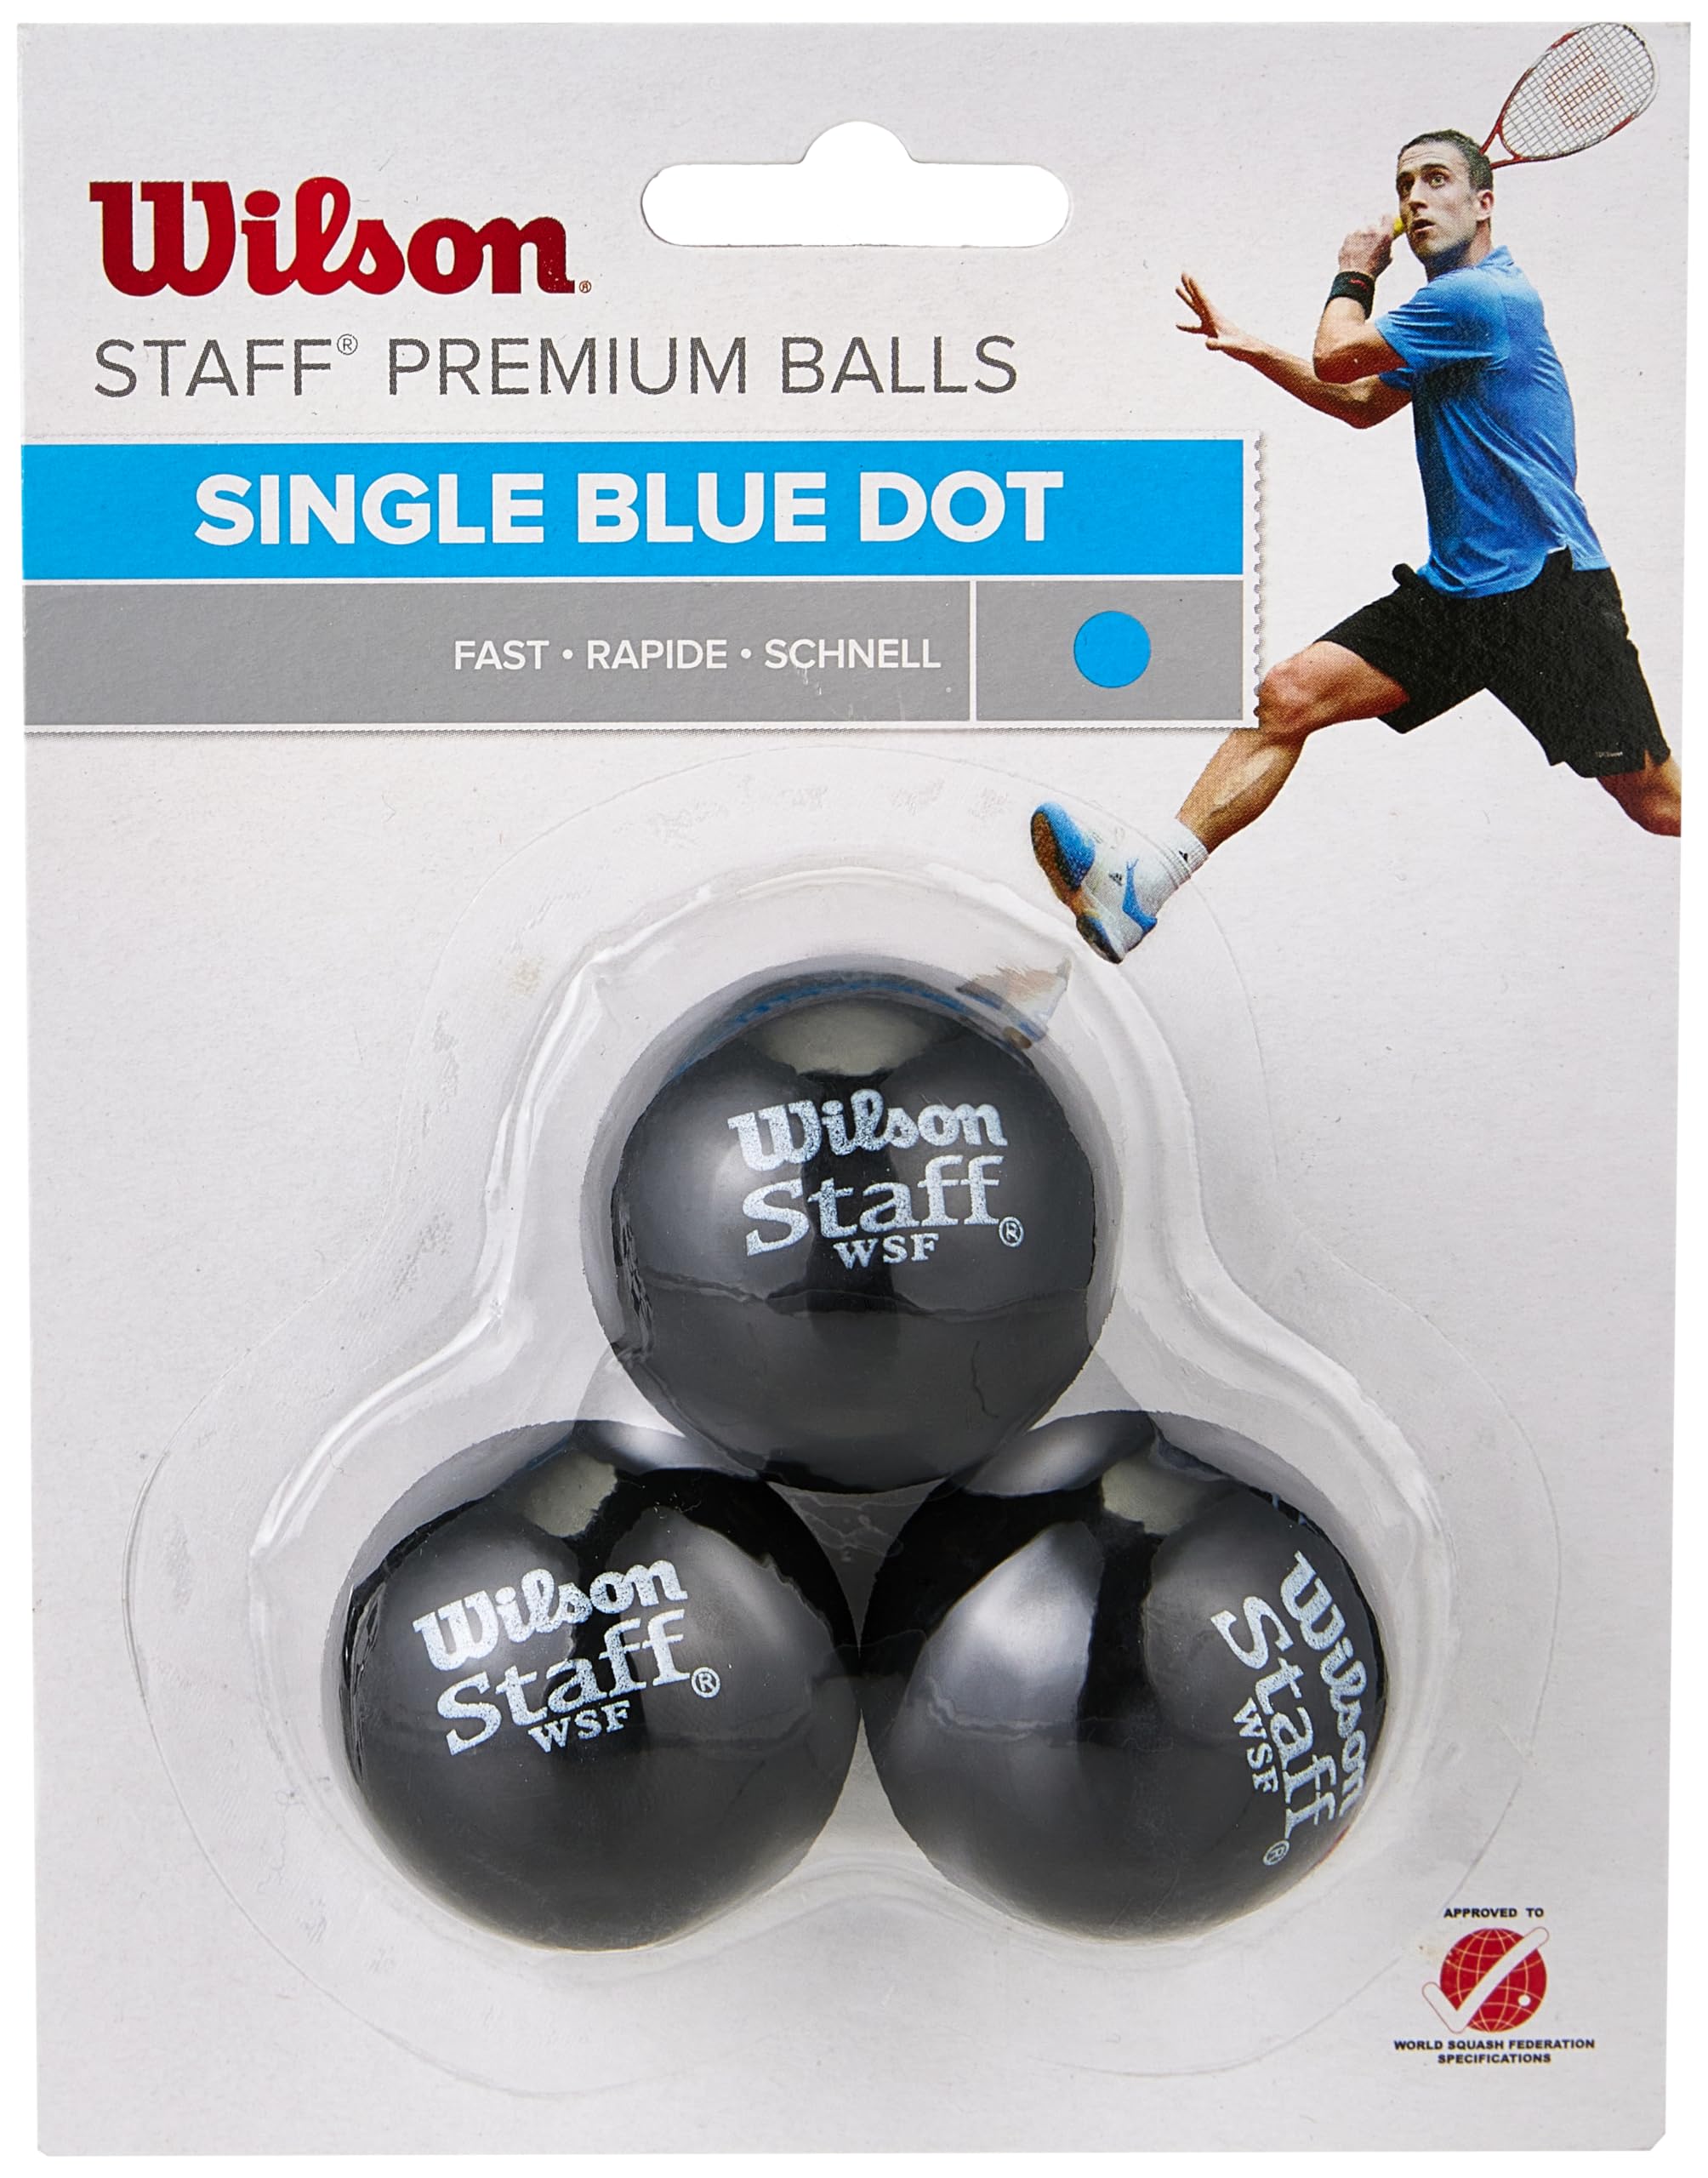 bien vendre Wilson Staff Squash Balls KioARKw7A en France Online